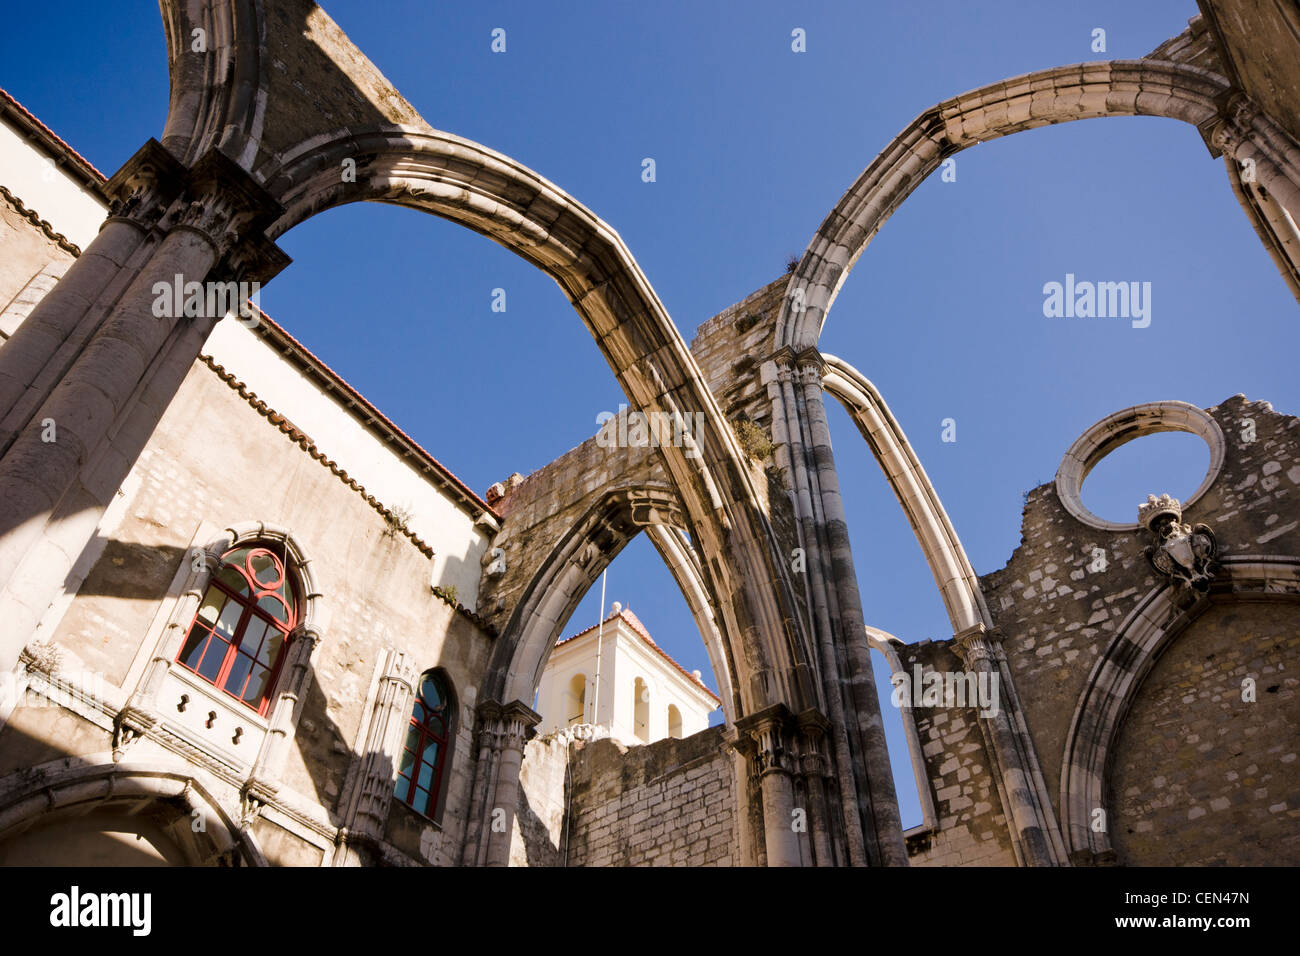 Convento do Carmo, a mediaeval convent ruined in the 1755 Earthquake. Lisbon, Portugal. Stock Photo